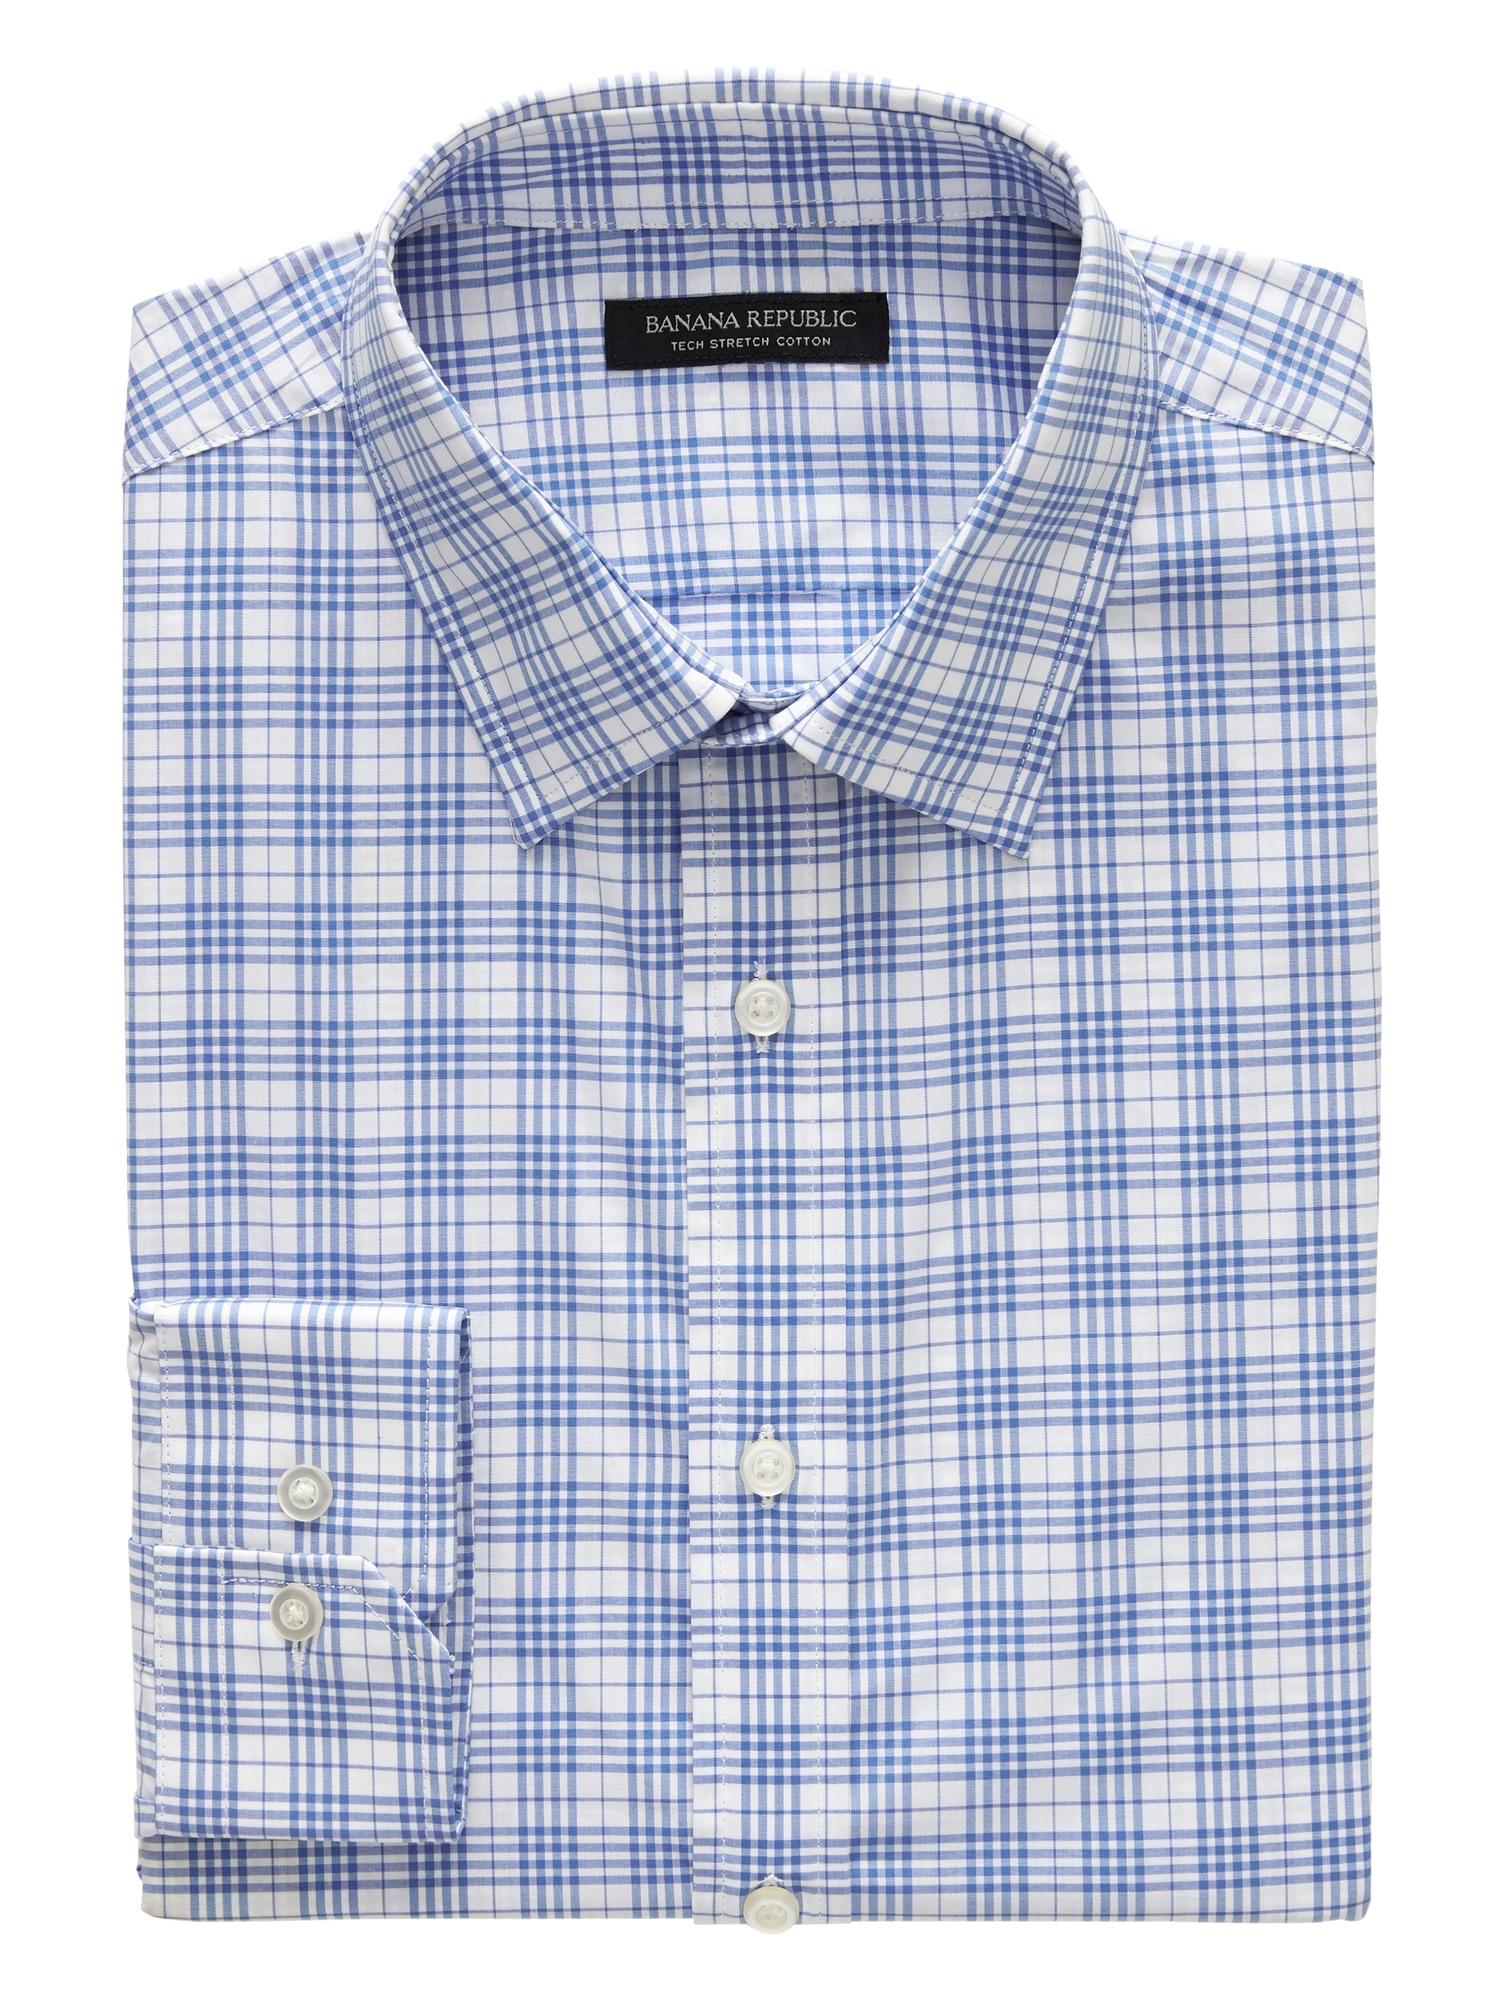 Banana Republic Slim-fit Tech-stretch Cotton Shirt in Blue for Men - Lyst